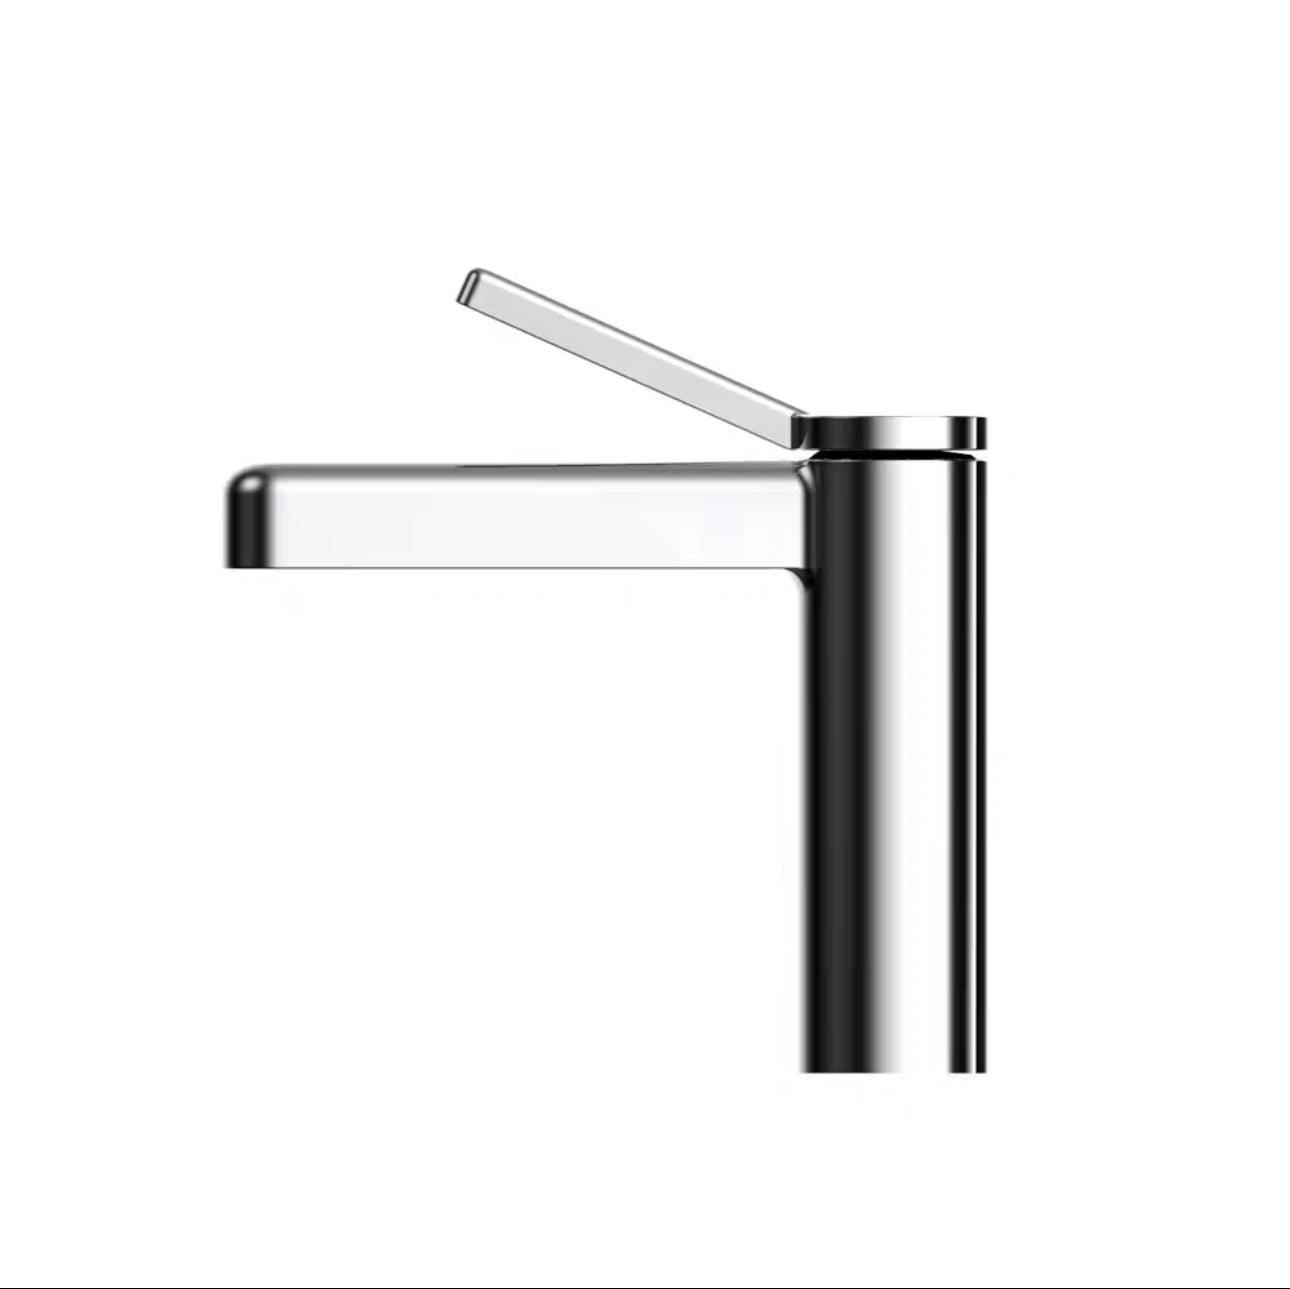 COMO / Bathroom Faucet - Handle Shop Couture 